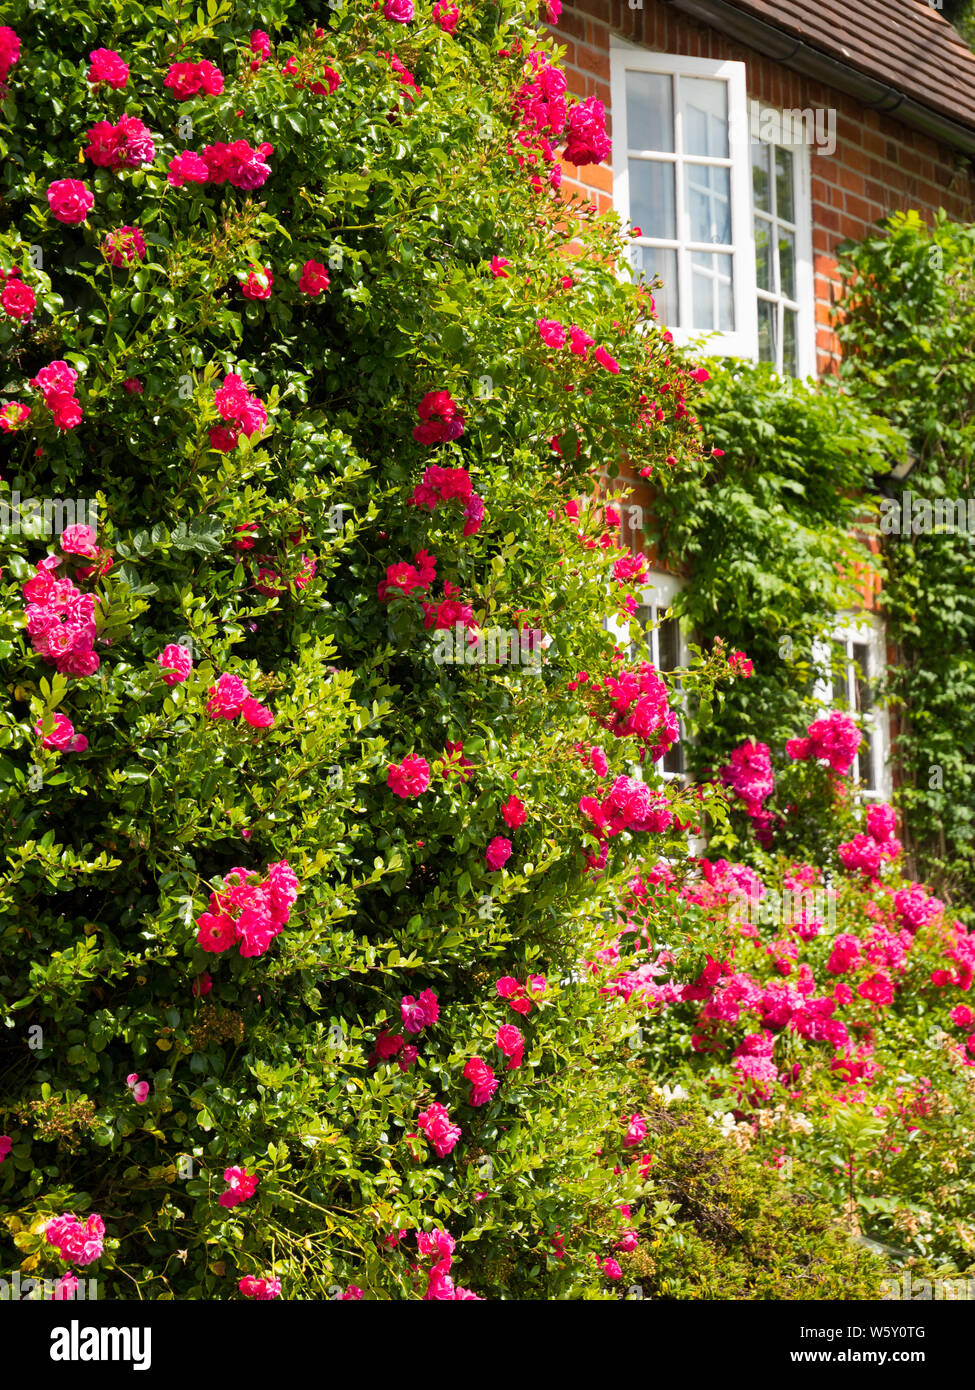 Cottage with Roses, Chiltern Hills AONB, Aldworth Village, Berkshire, England, UK, GB. Stock Photo